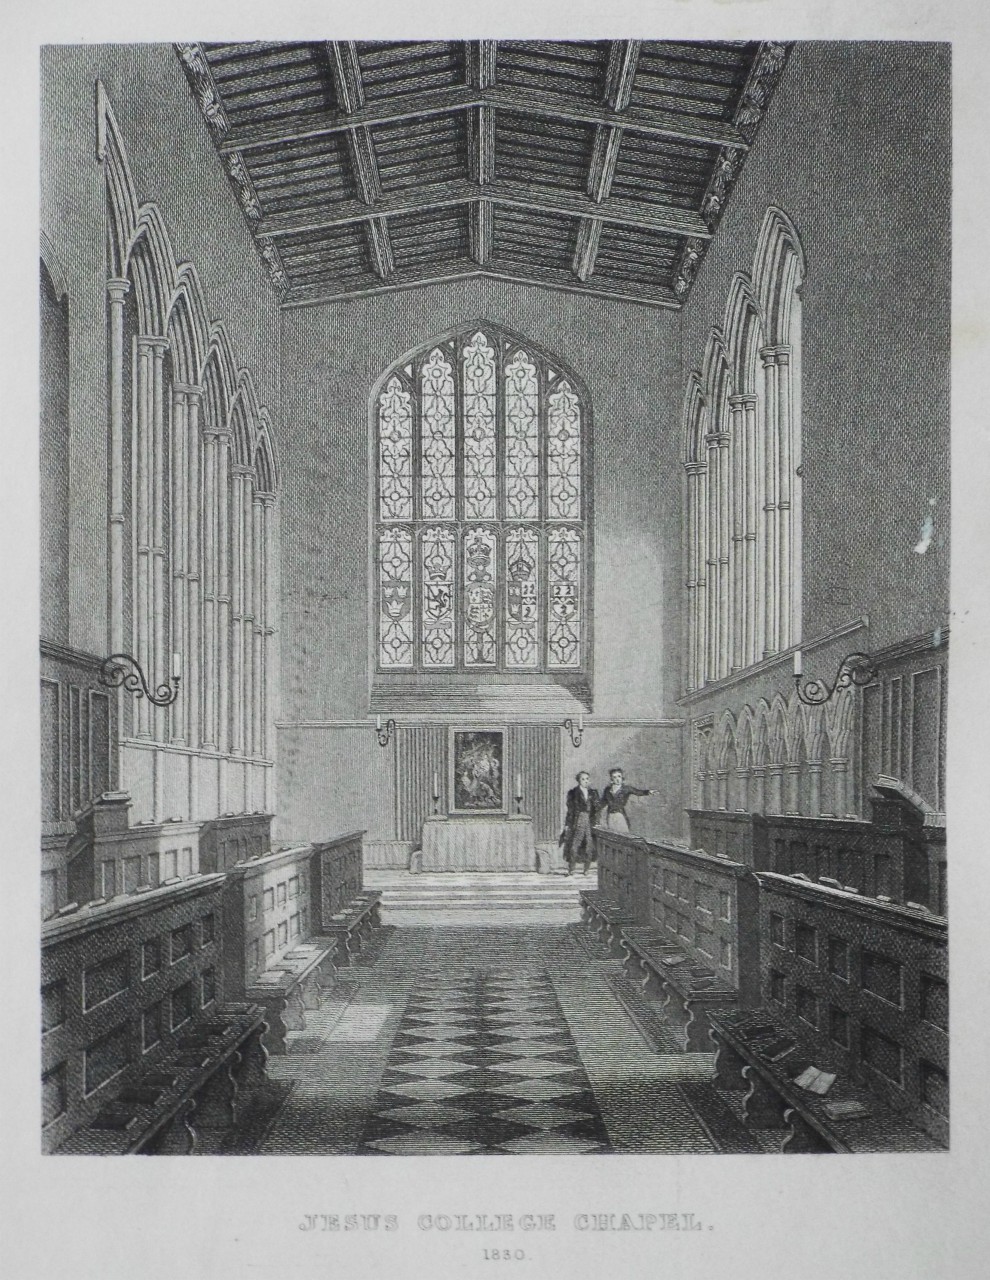 Print - Jesus College Chapel. 1830.